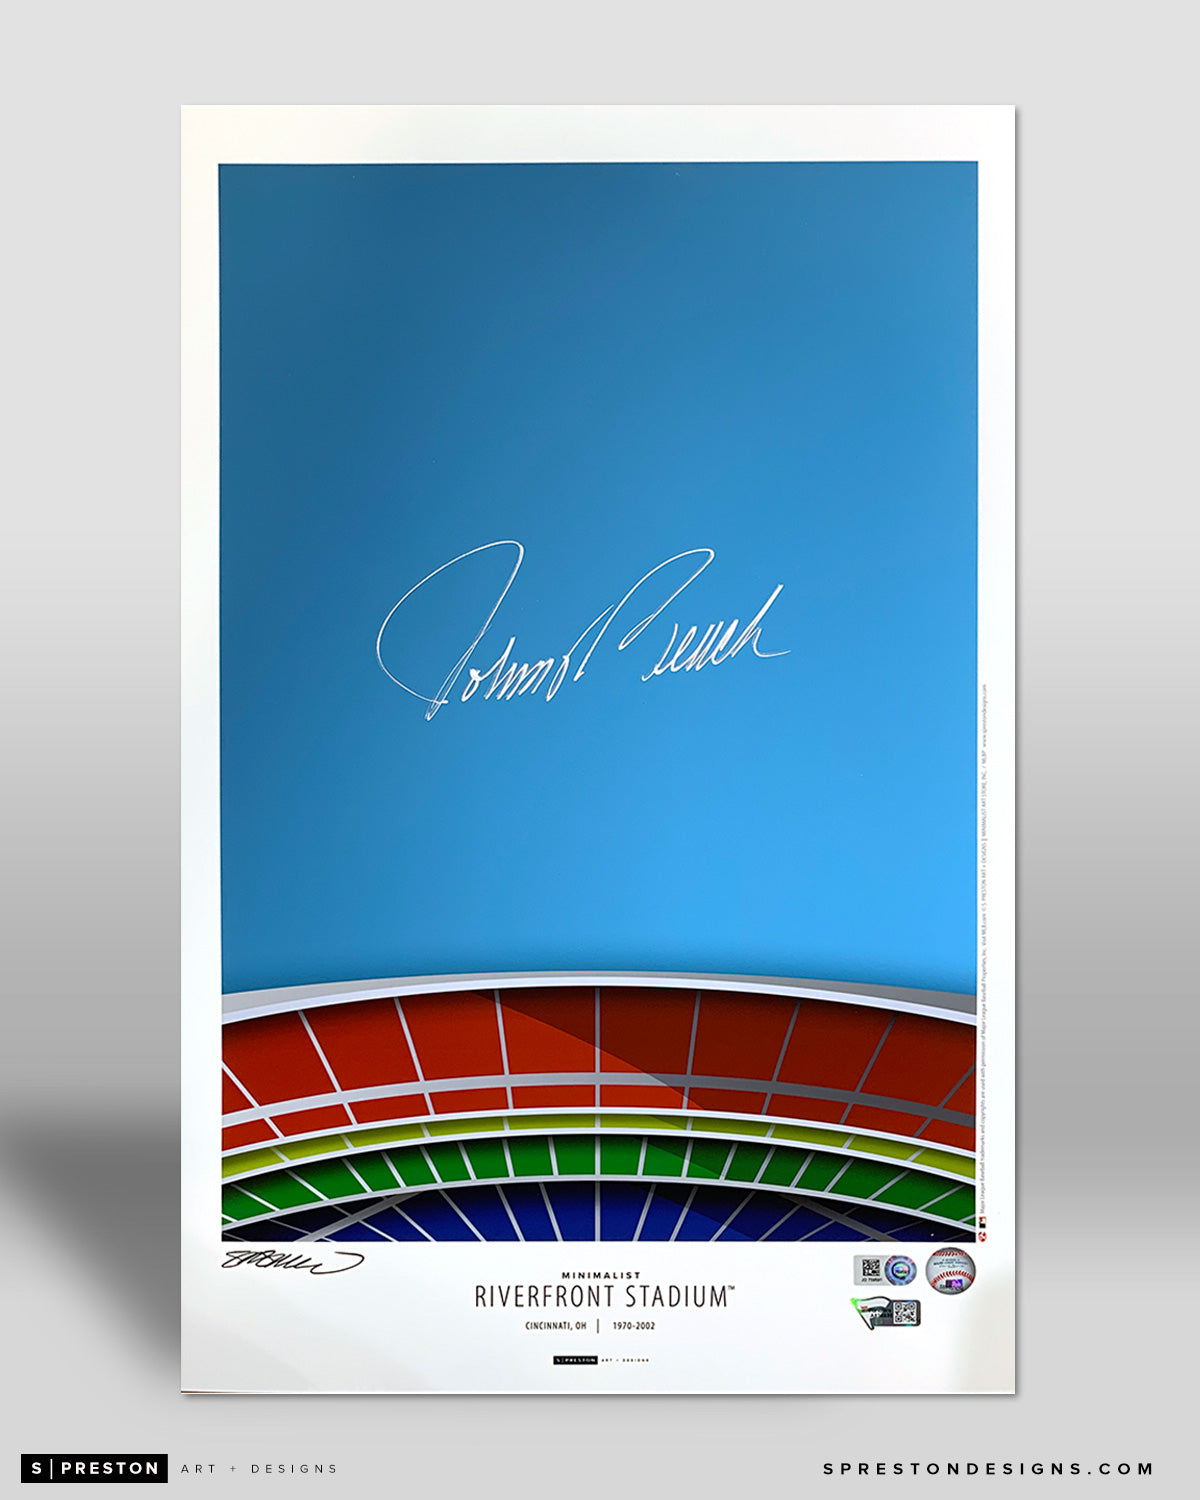 Minimalist Riverfront Stadium - Johnny Bench Signed - Poster Print